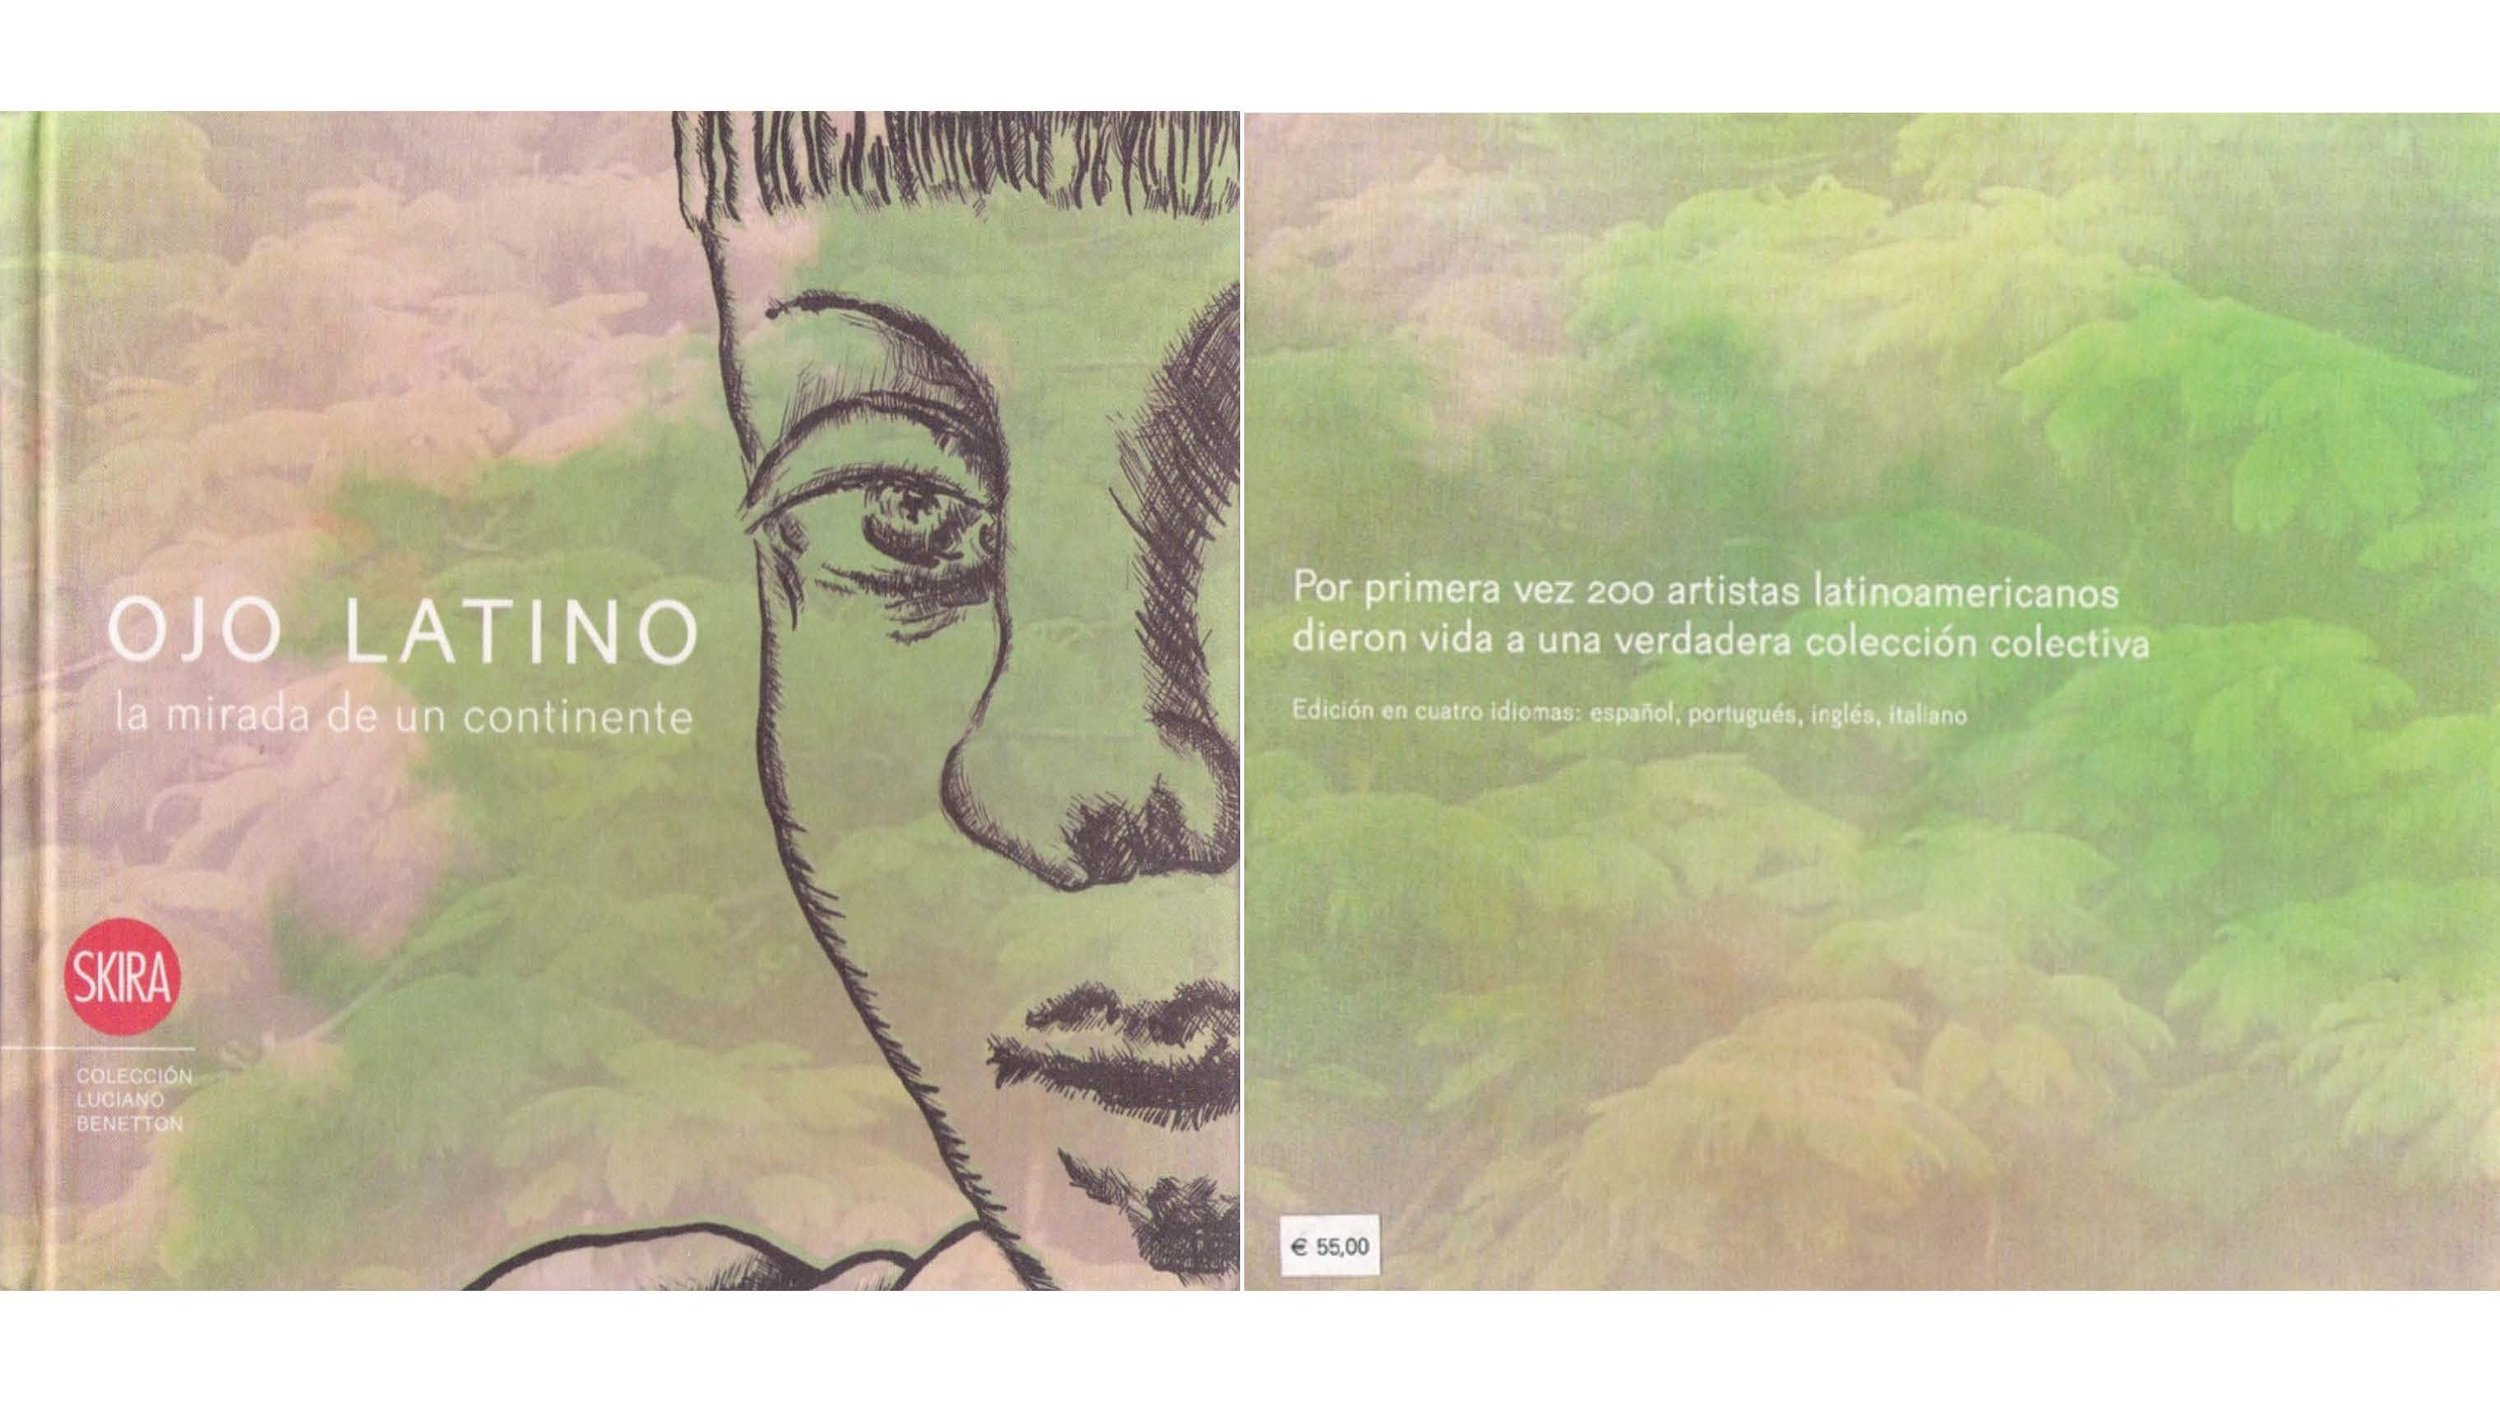 2008: Libro “Ojo Latino”, Skira, Milano, Italia